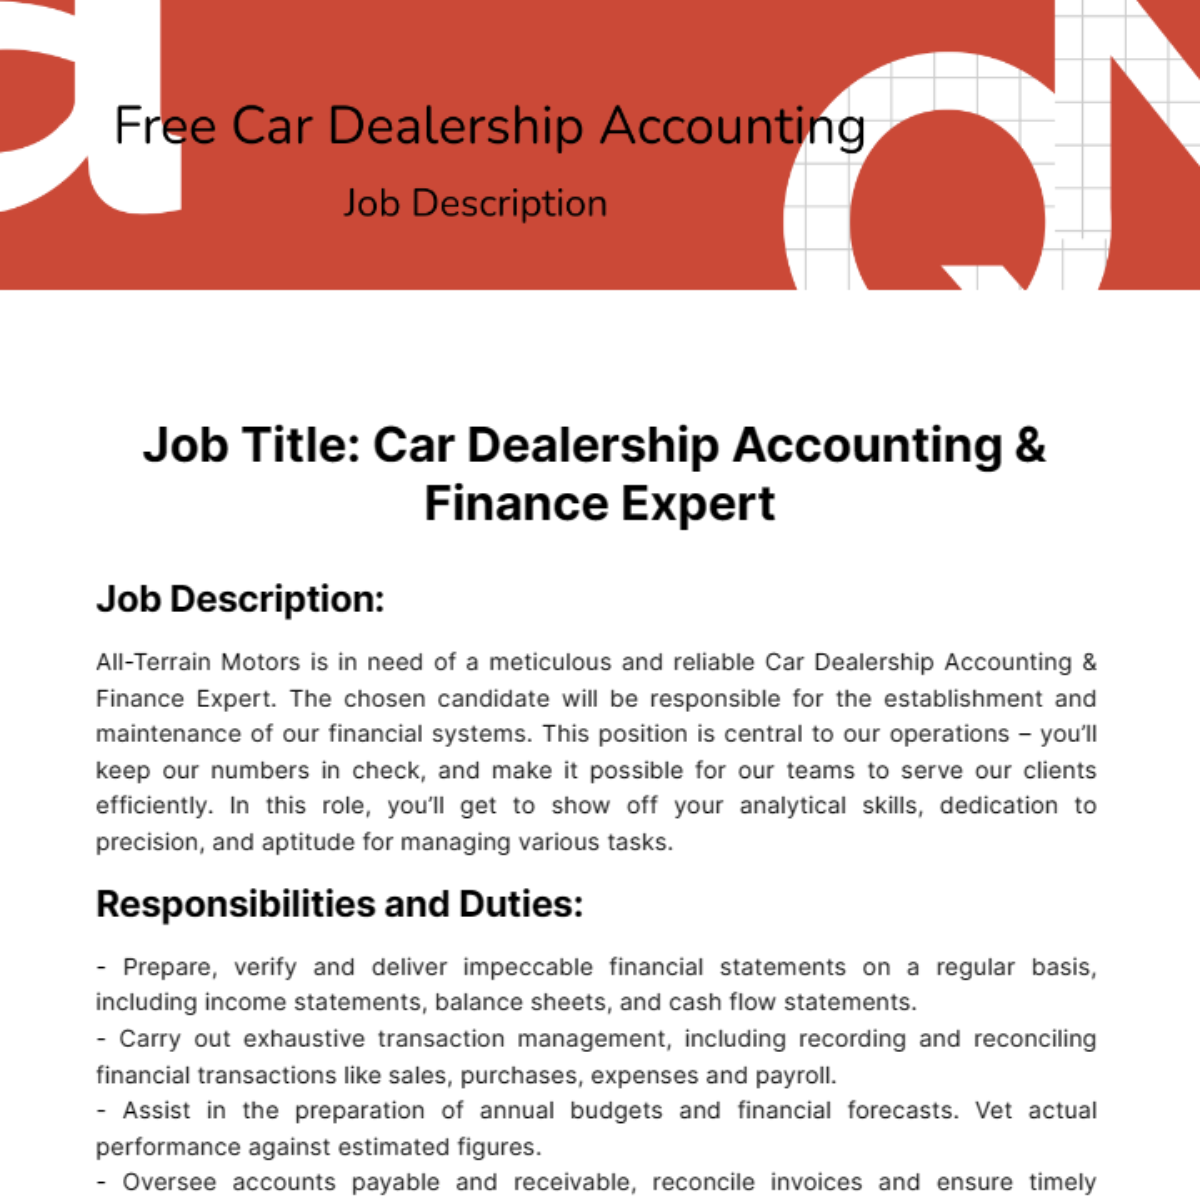 Car Dealership Accounting Job Description Template